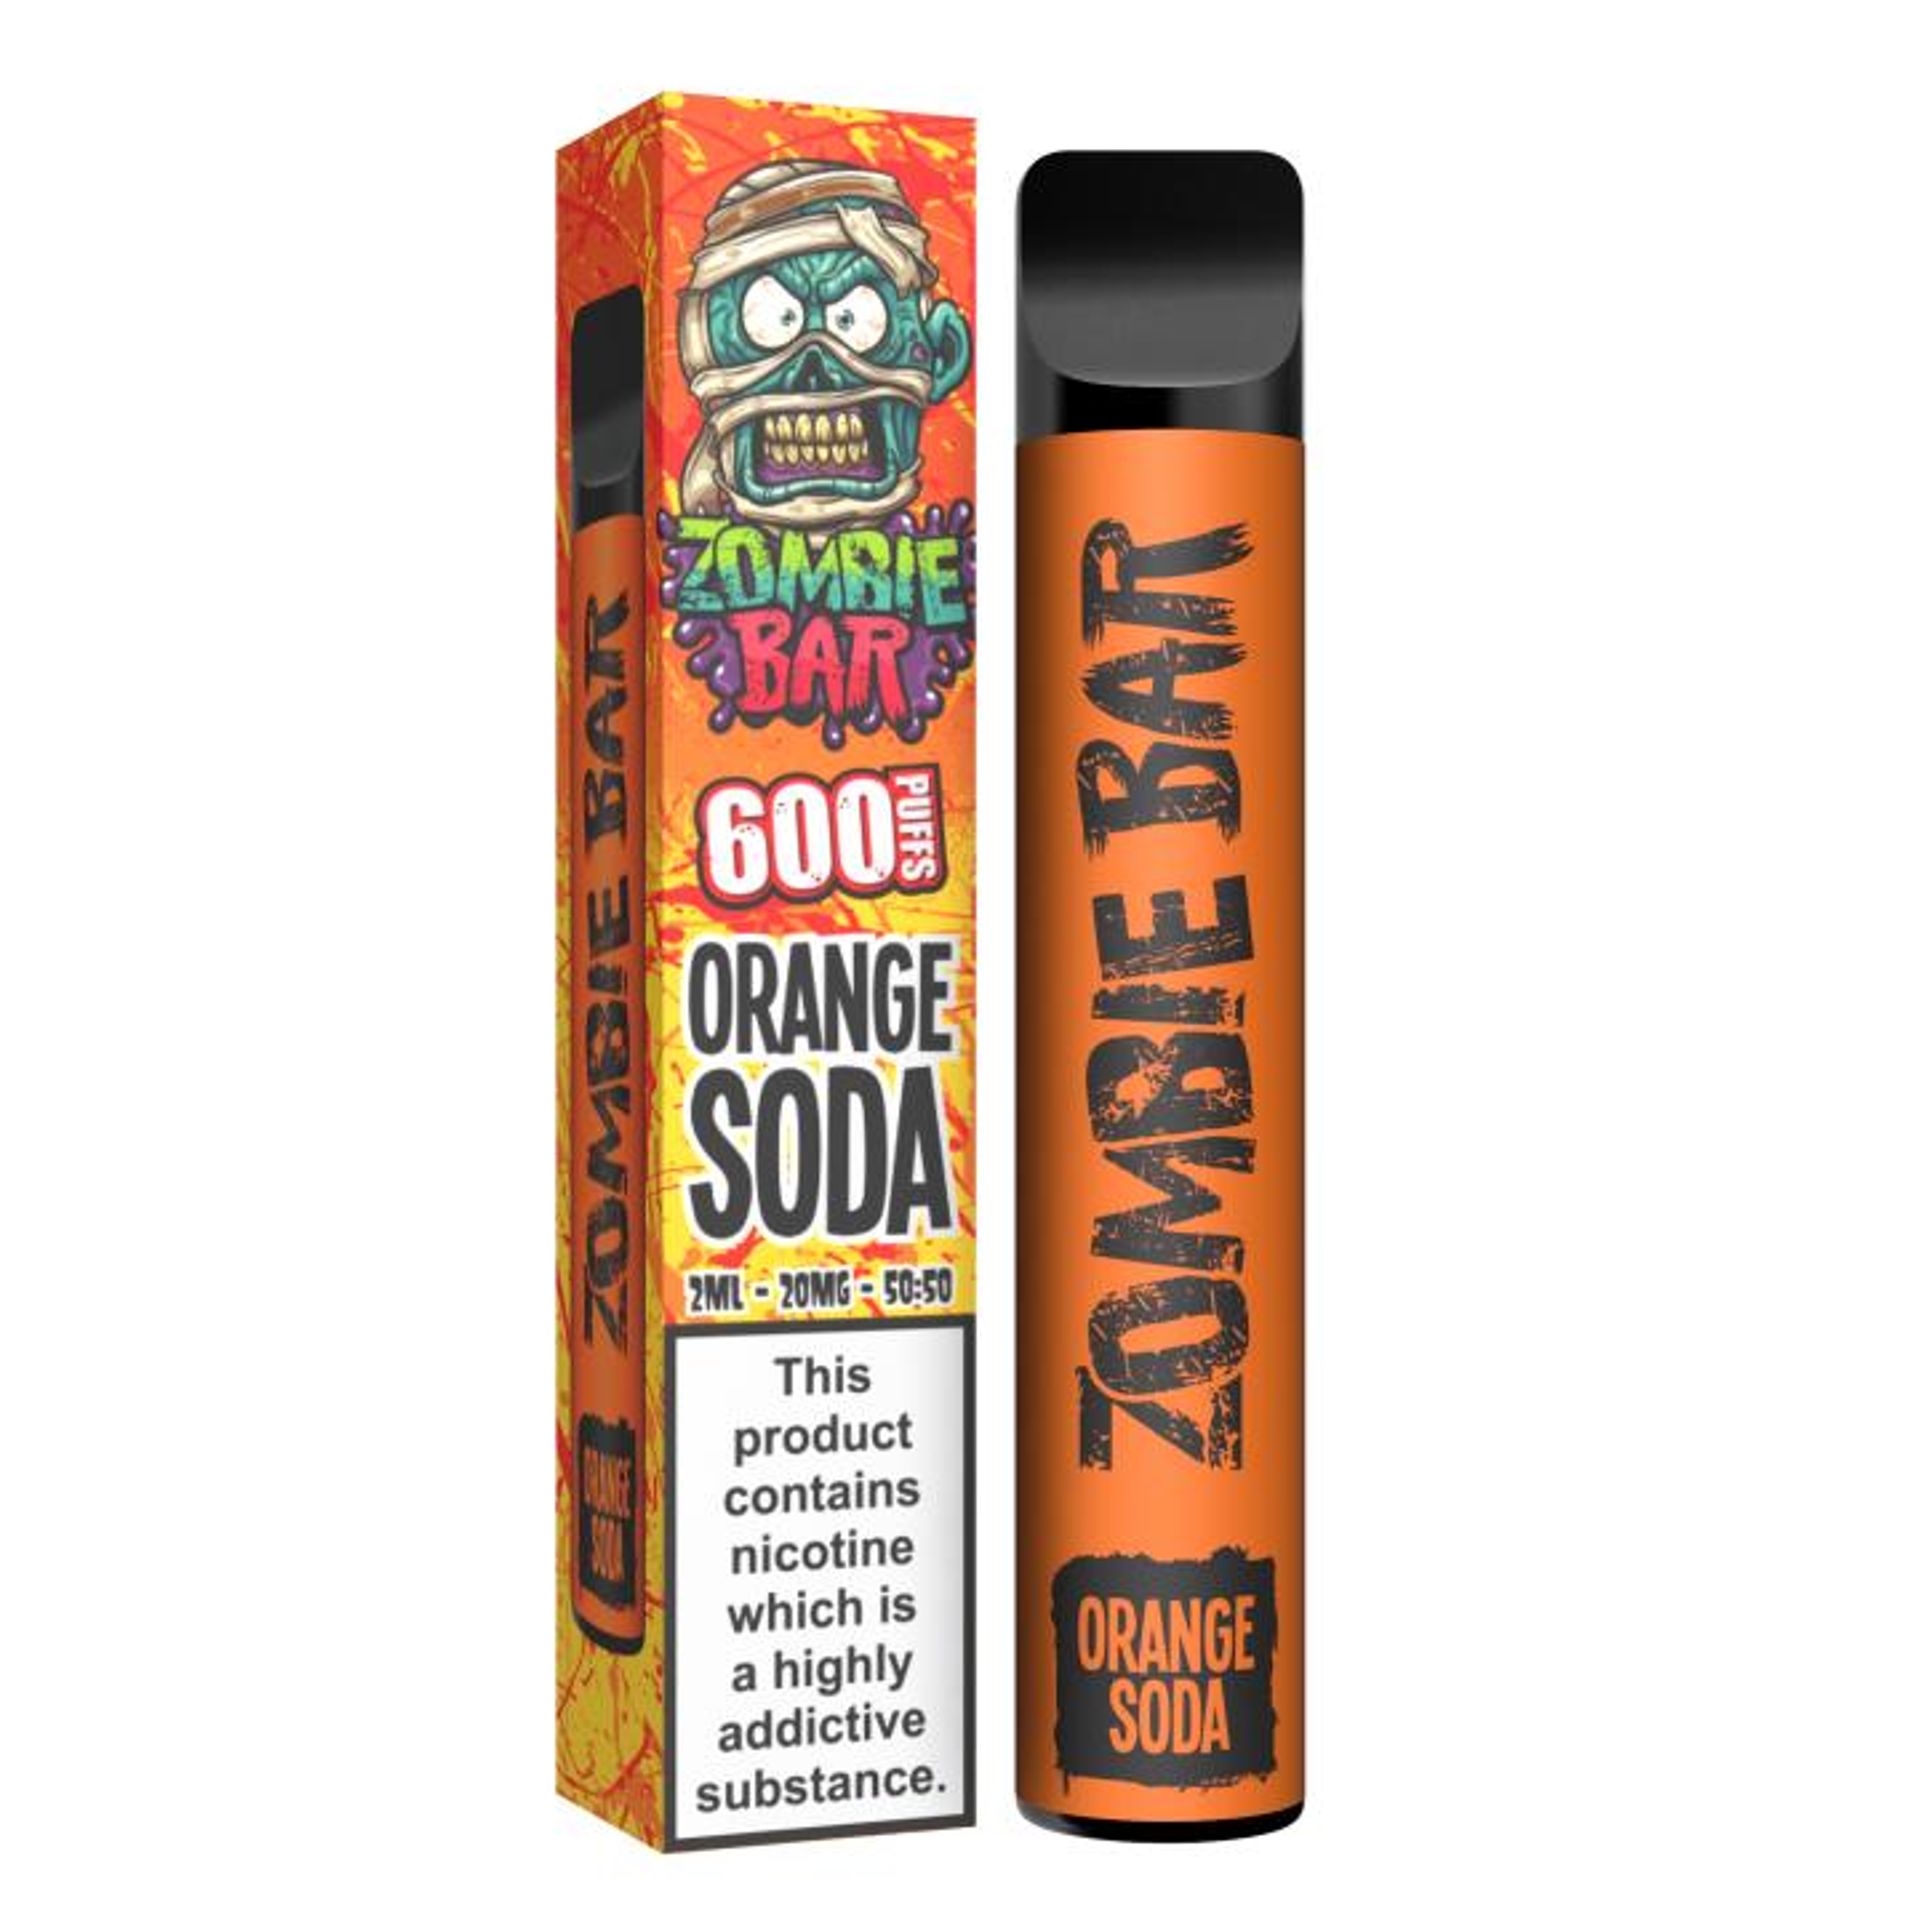 Image of Orange Soda by Zombie Bar